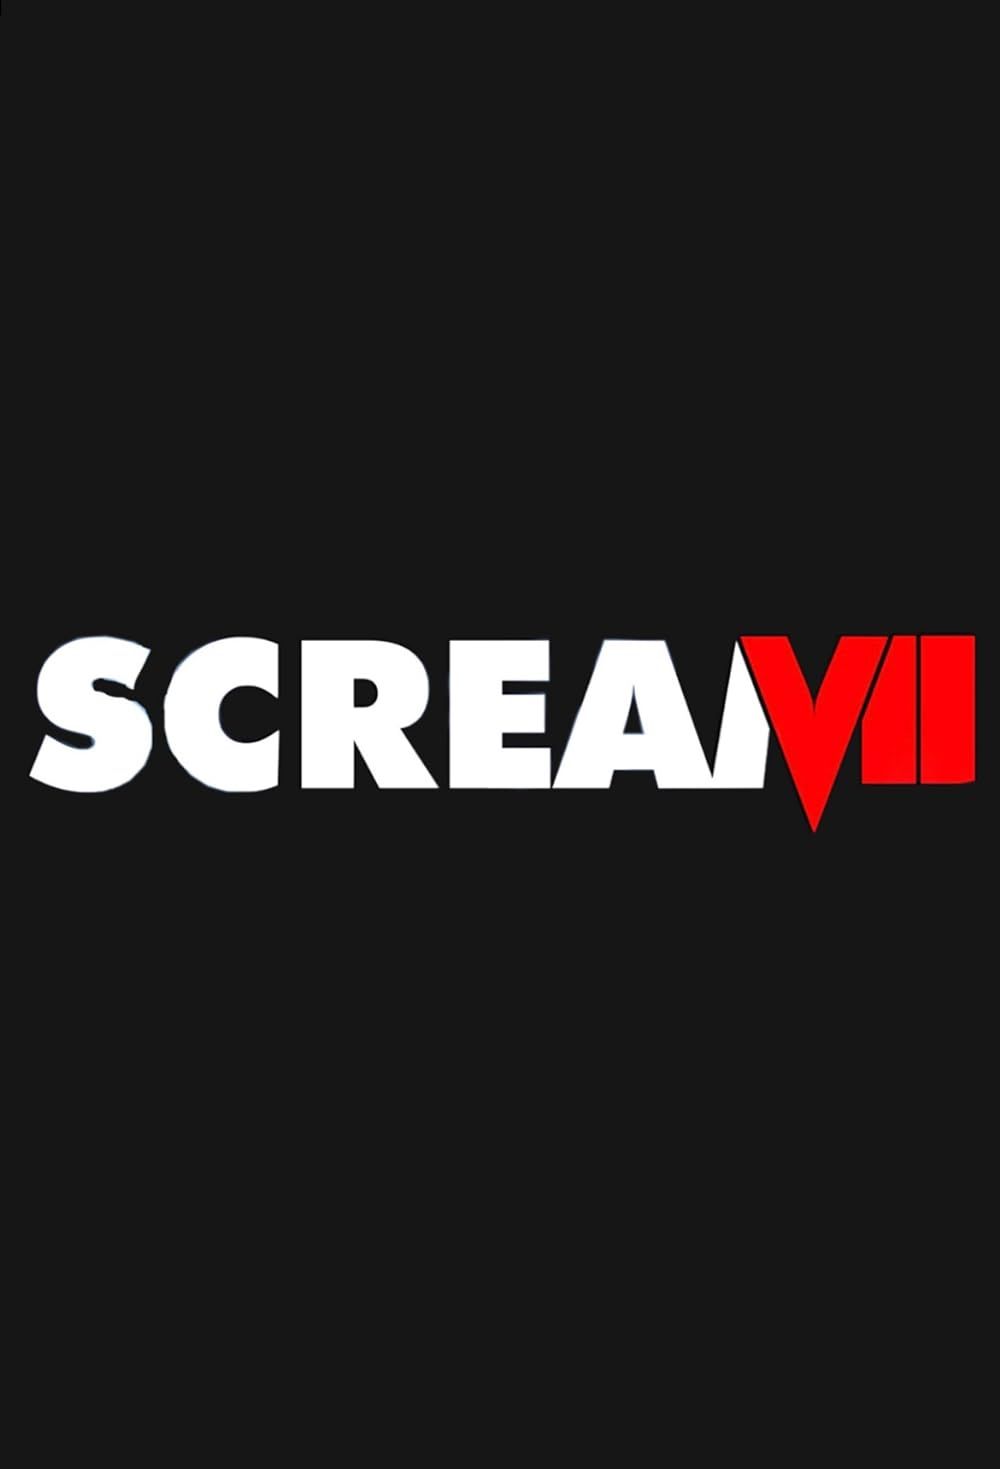 The Scream VII logo against a black background